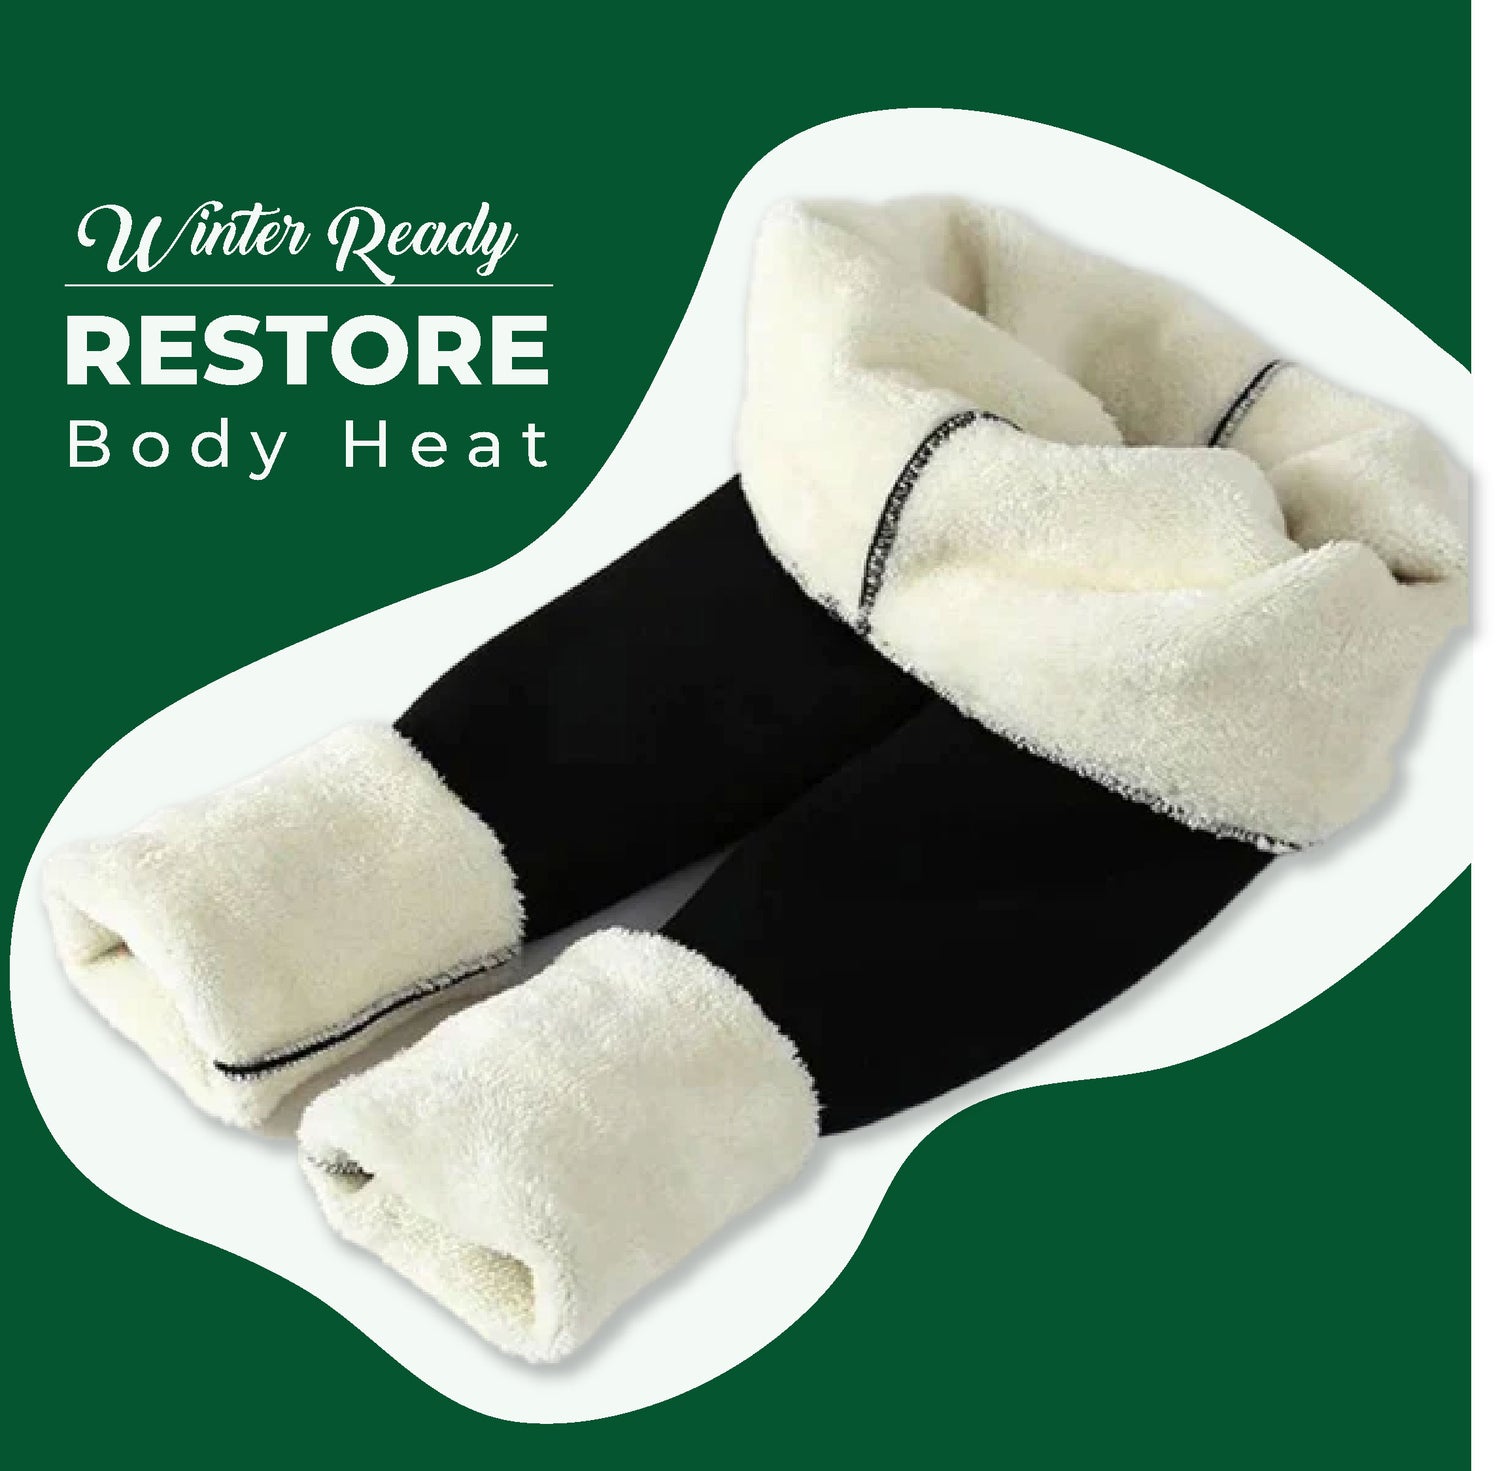 Plus Size Fur Lined Velvet Print Leggings Warm Winter Stretch Fleece 1X 2X  3X 4X | eBay